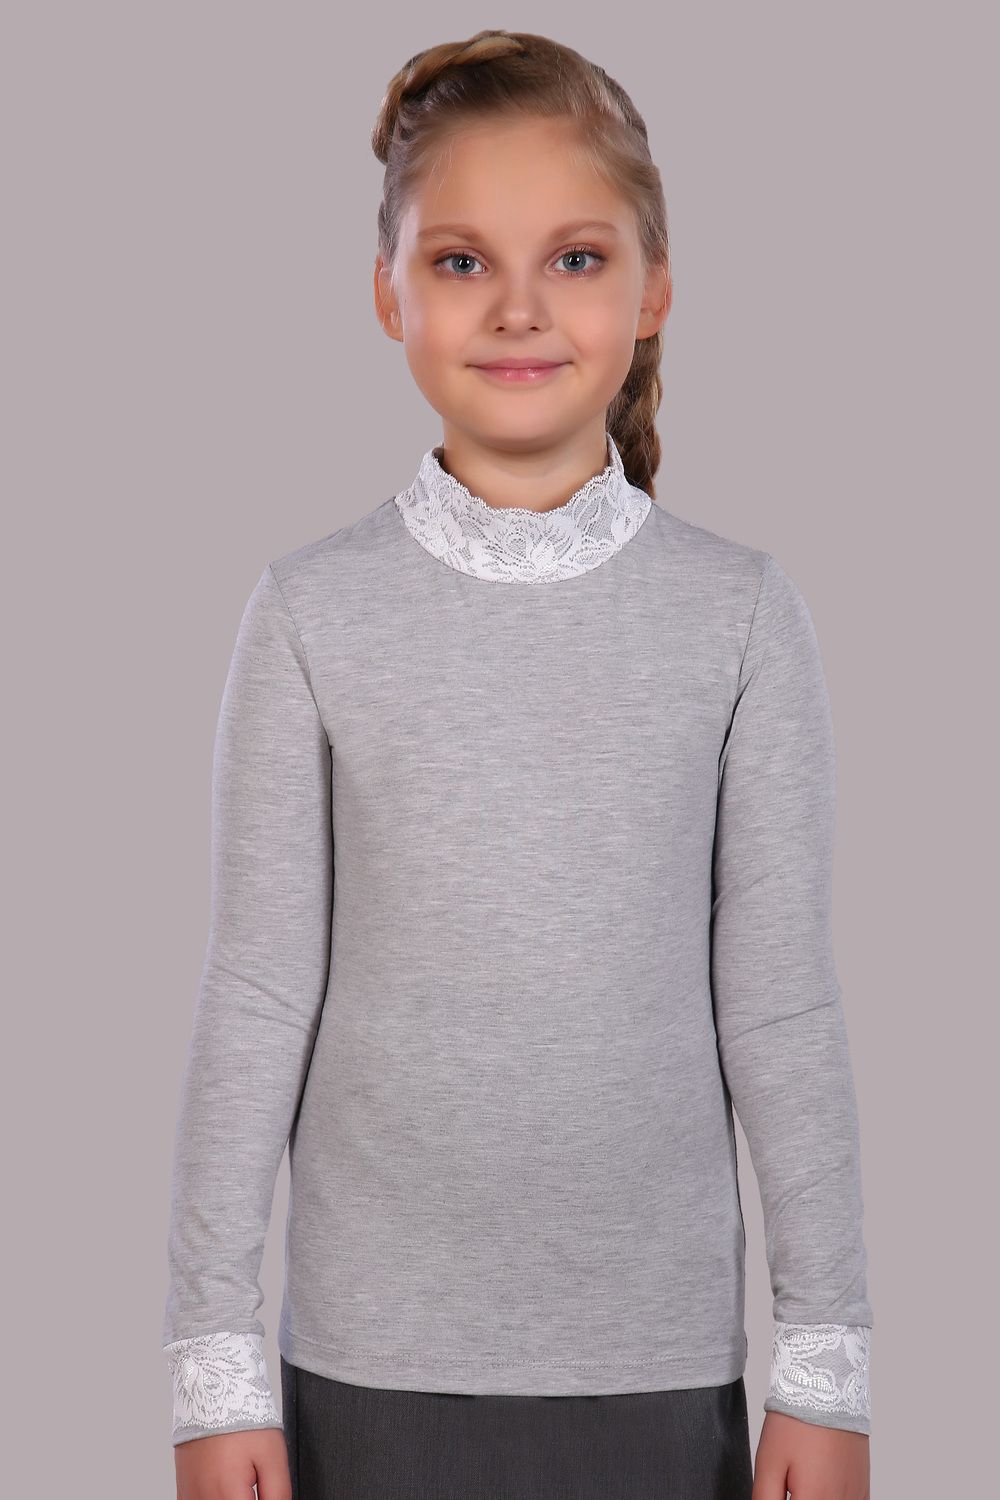 Блузка для девочки Дженифер арт. 13119 - серый меланж